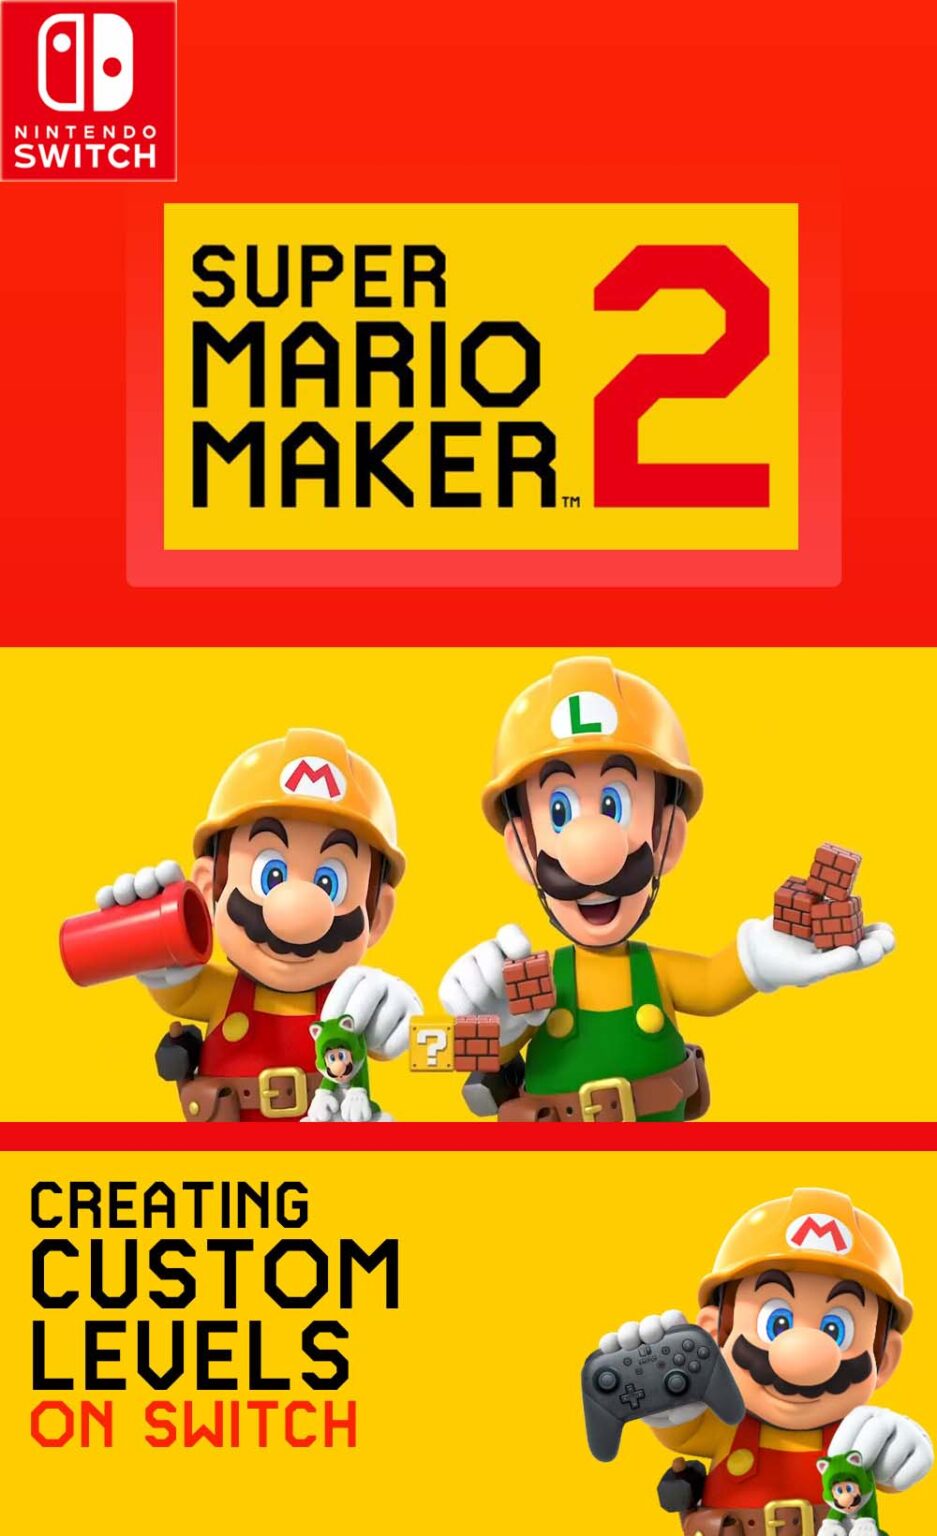 Super Mario maker. Mario maker 2. Mario maker 2 Switch. Mario maker. Super mario nsp